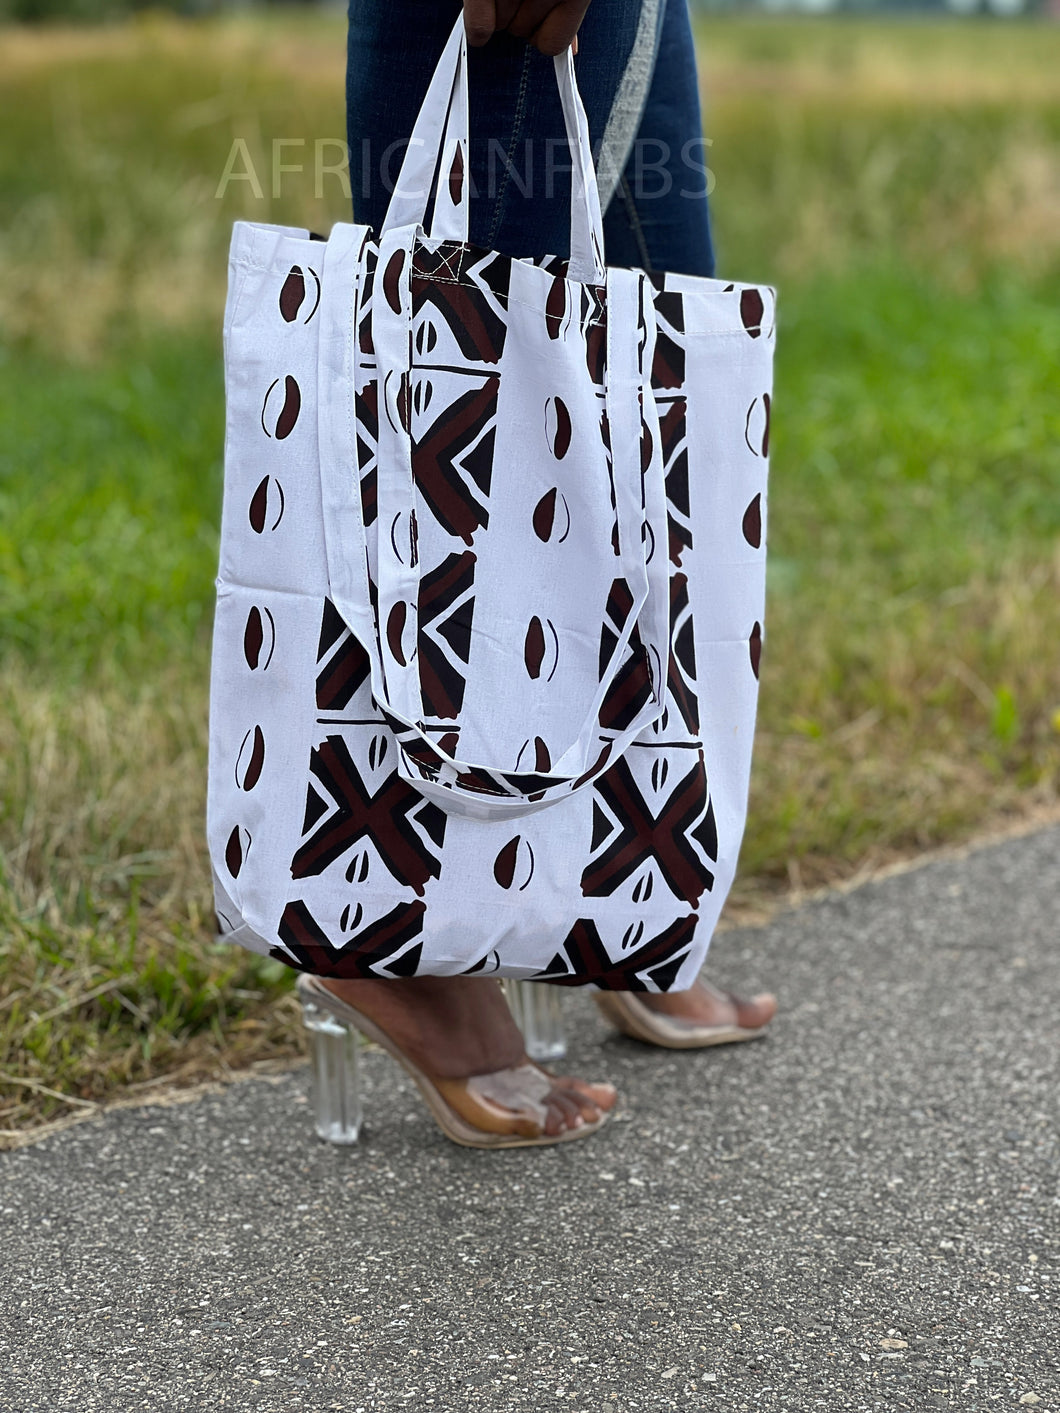 Shopper bag with African print - White / brown bogolan - Reusable Shopping Bag made of cotton